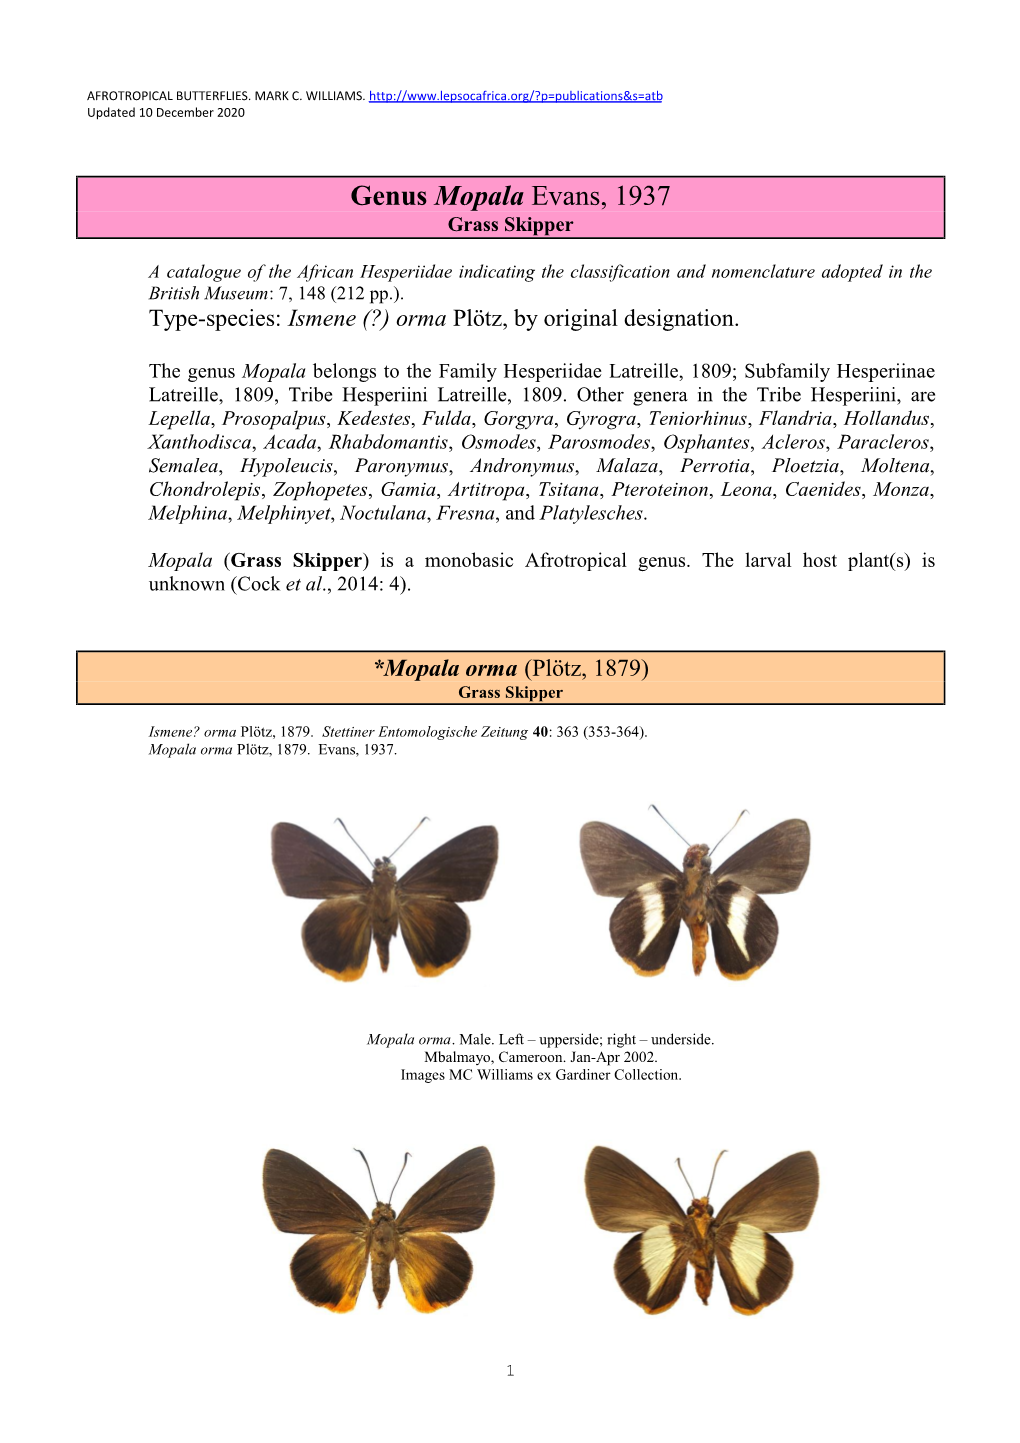 091 Genus Mopala Evans